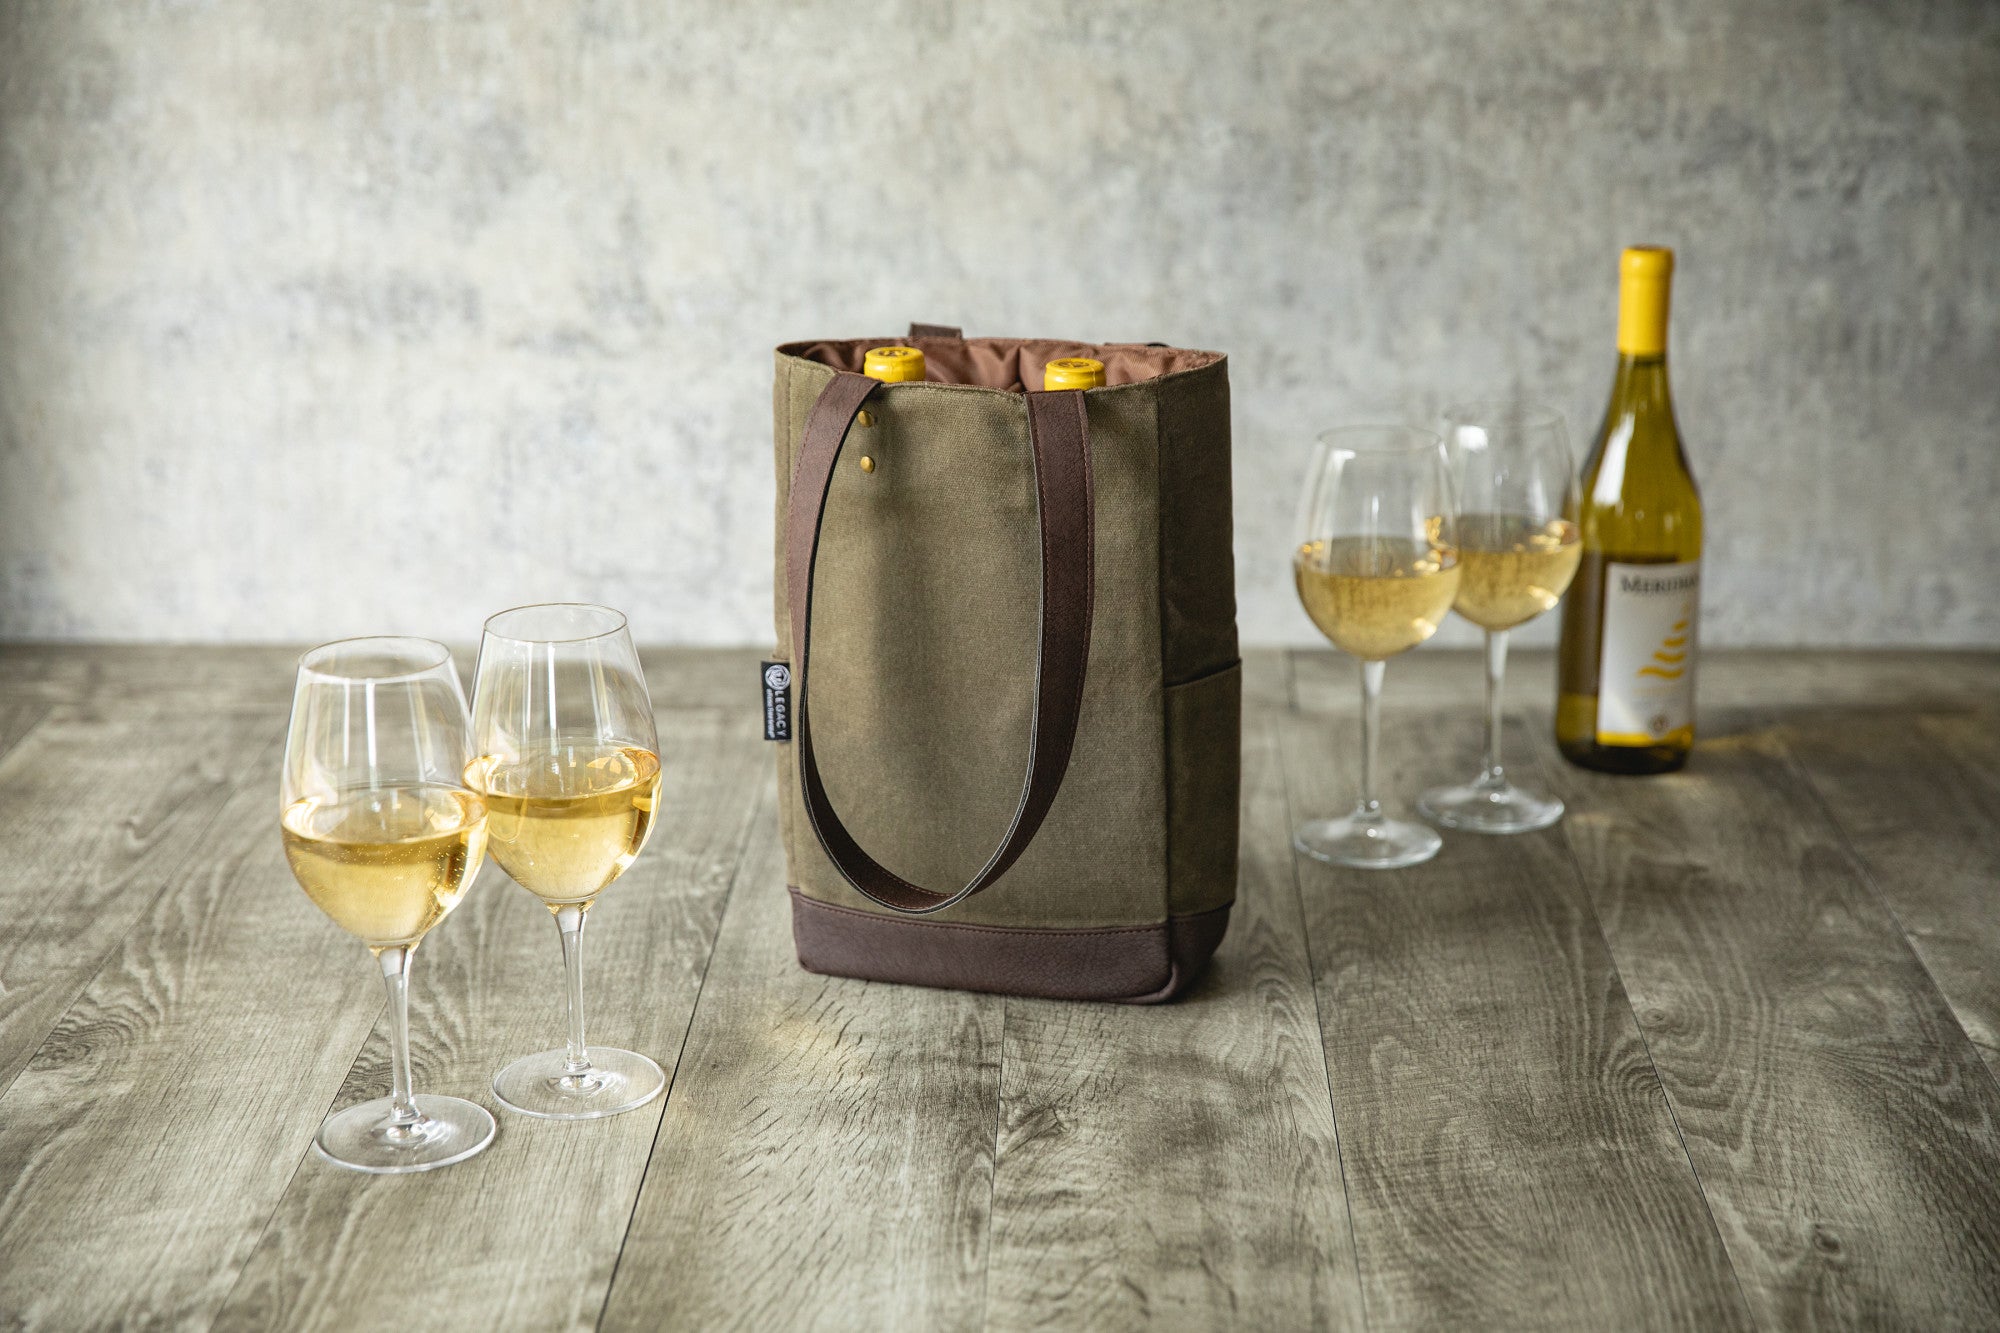 Detroit Lions - 2 Bottle Insulated Wine Cooler Bag